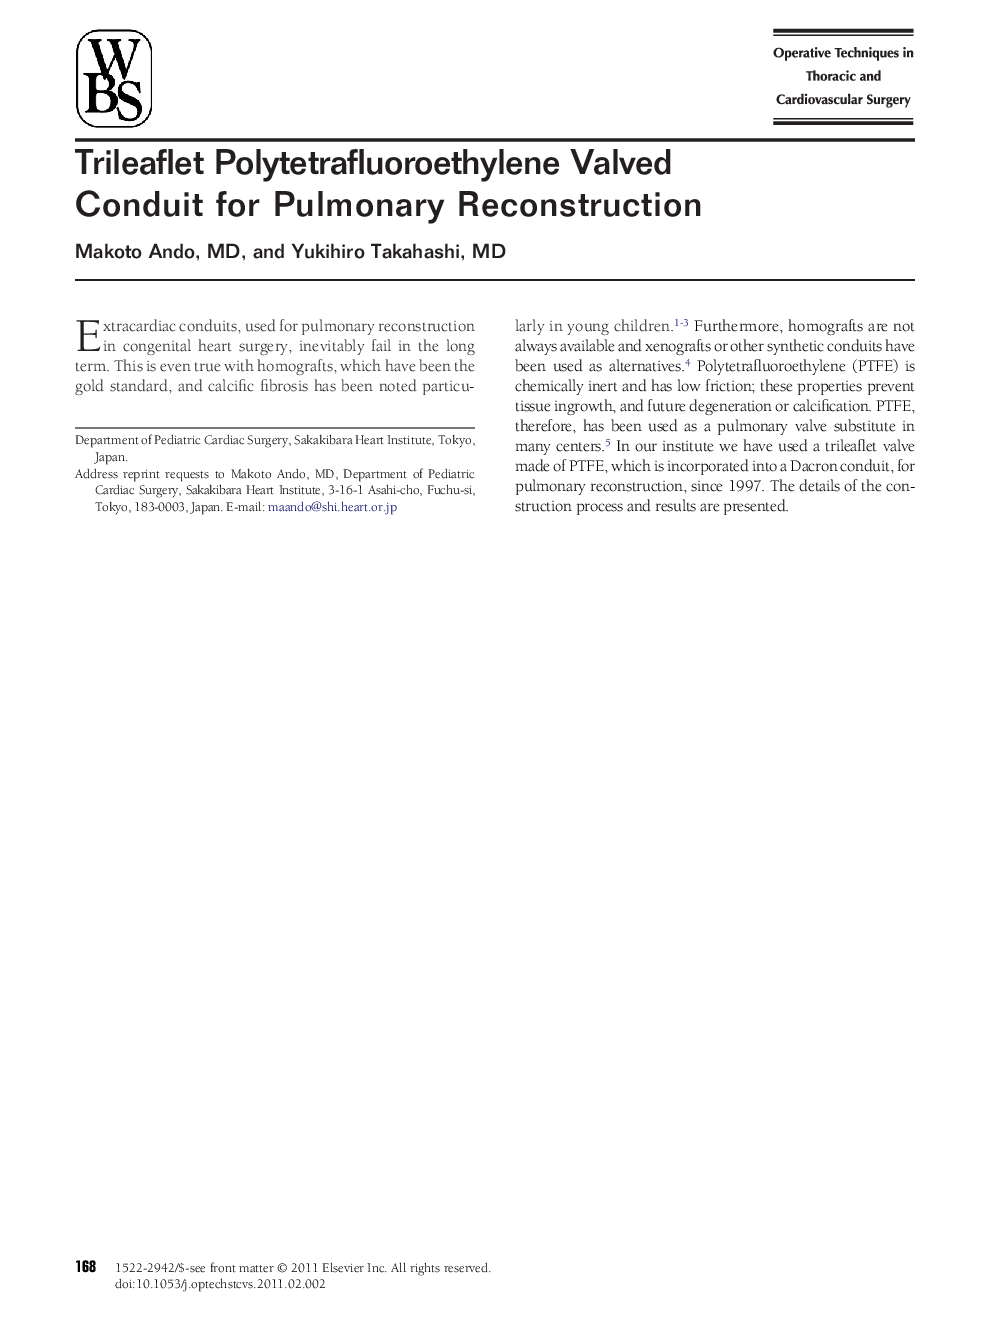 Trileaflet Polytetrafluoroethylene Valved Conduit for Pulmonary Reconstruction